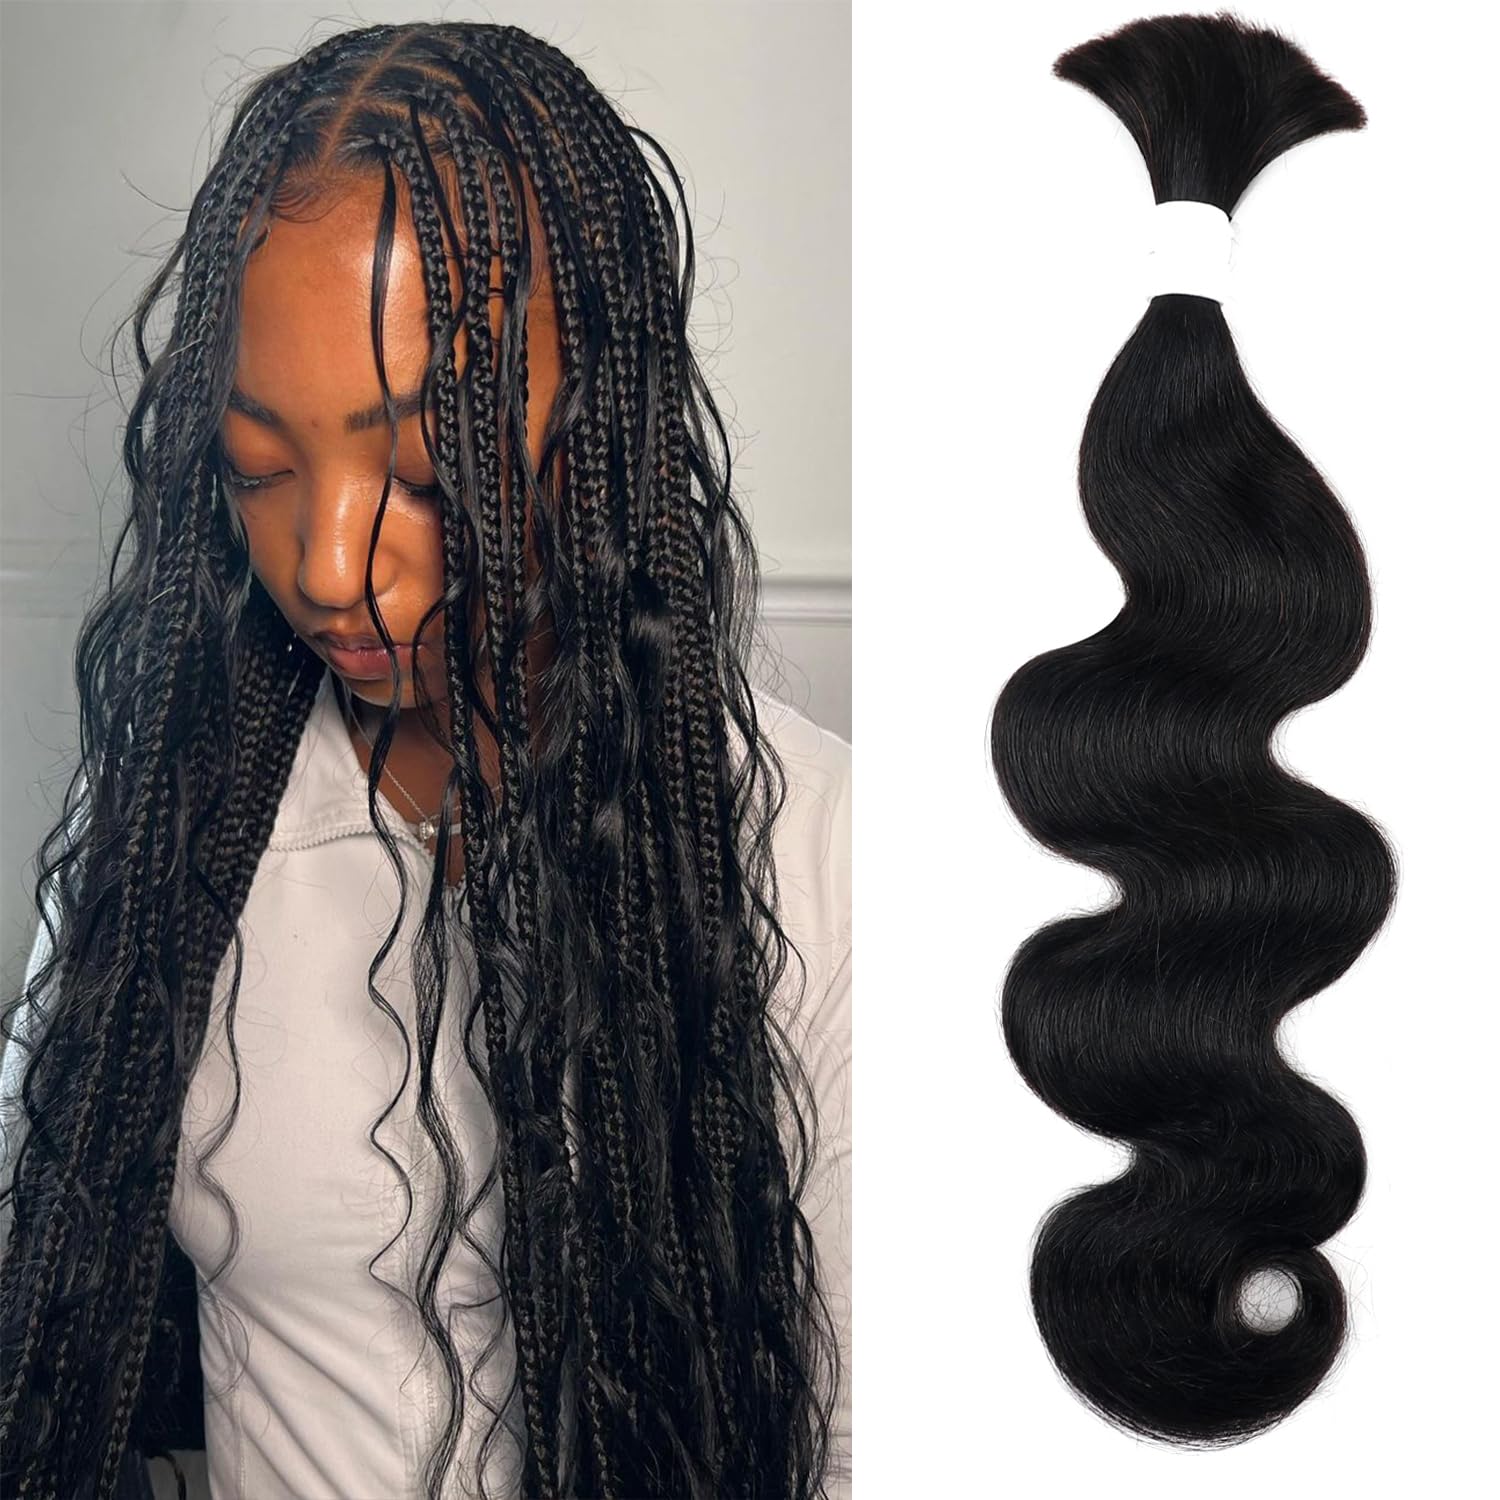  Bulk Deep Wave Virgin Braiding Hair for Bohemian Knotless Boho  Braids - No Weft, 100% Human Hair Bundles for Braiding (20inch, 100g, 4/30)  : Beauty & Personal Care